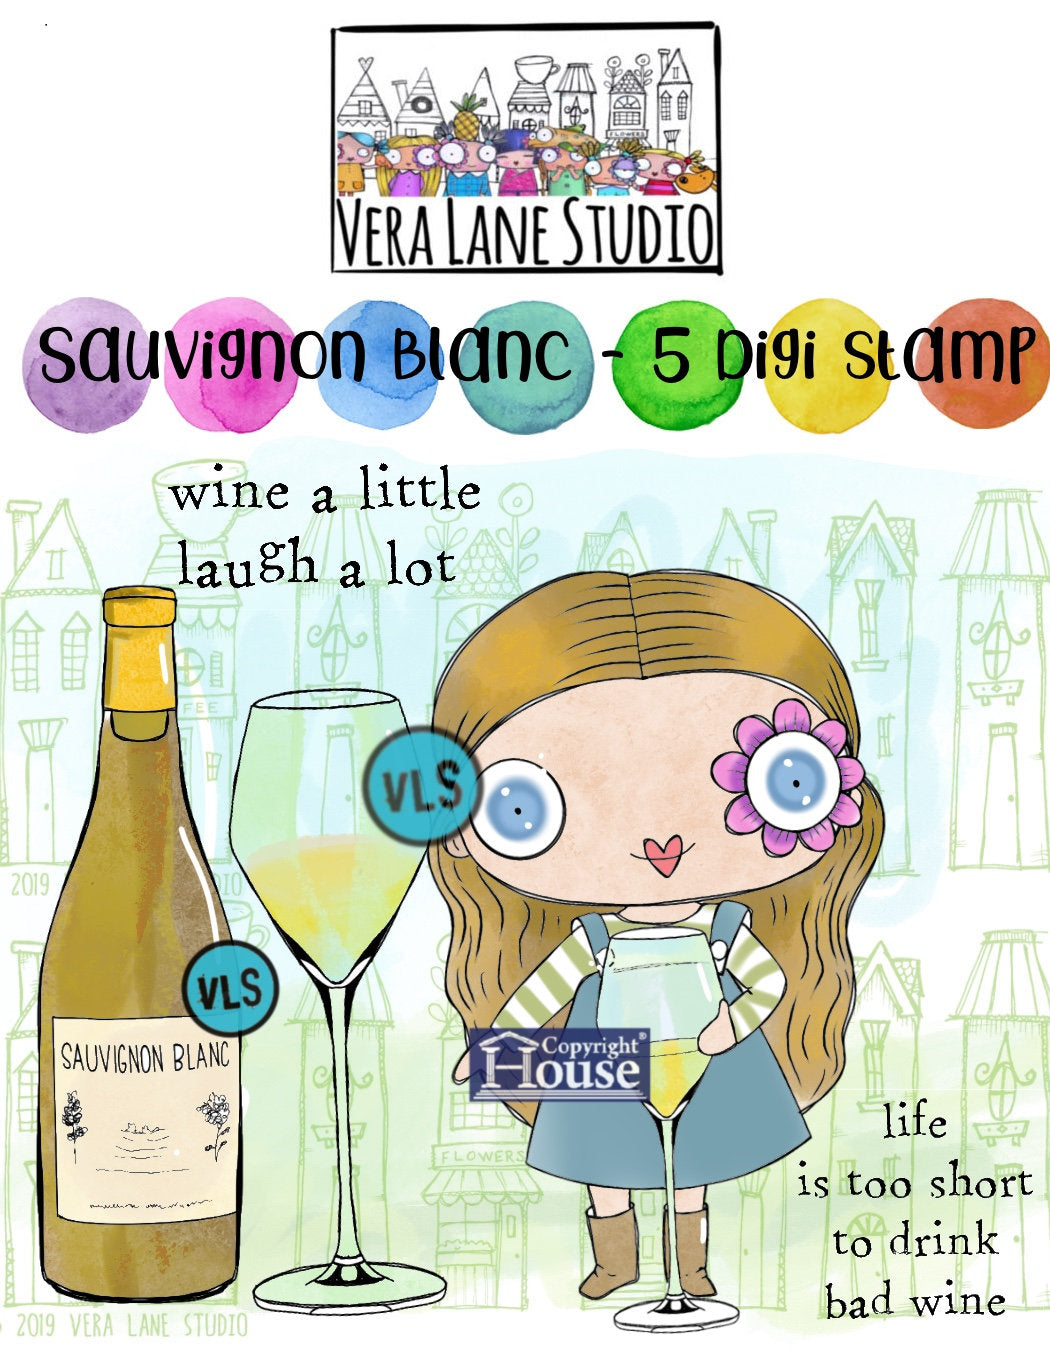 Sauvignon Blanc - 5 Digi stamp bundle in jpg and png files